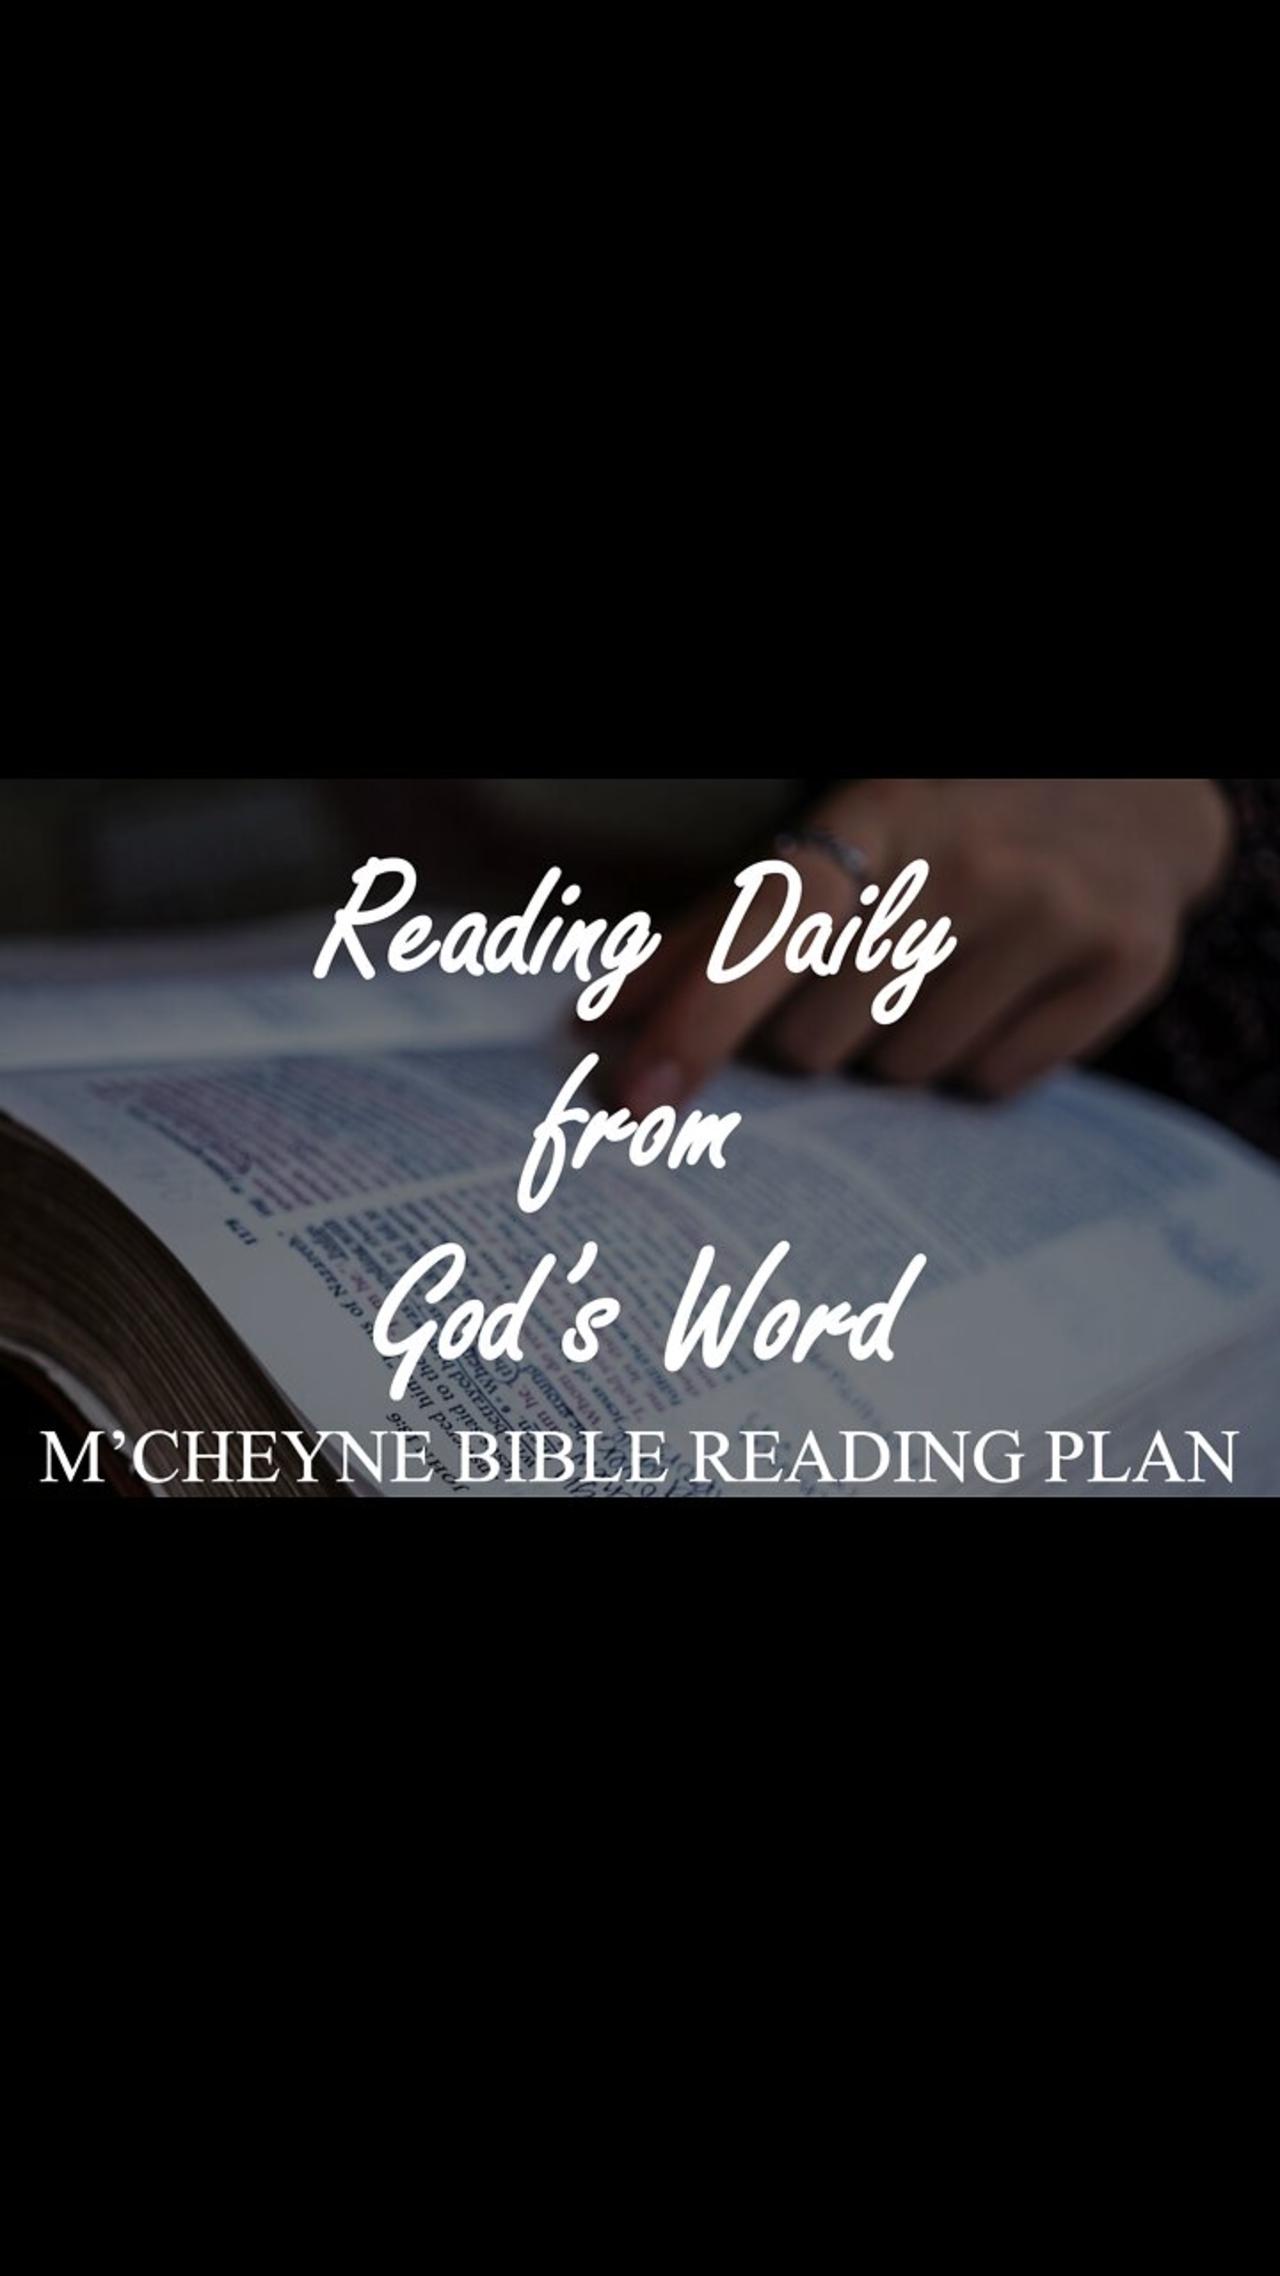 M’CHEYNE BIBLE READING PLAN - August 27